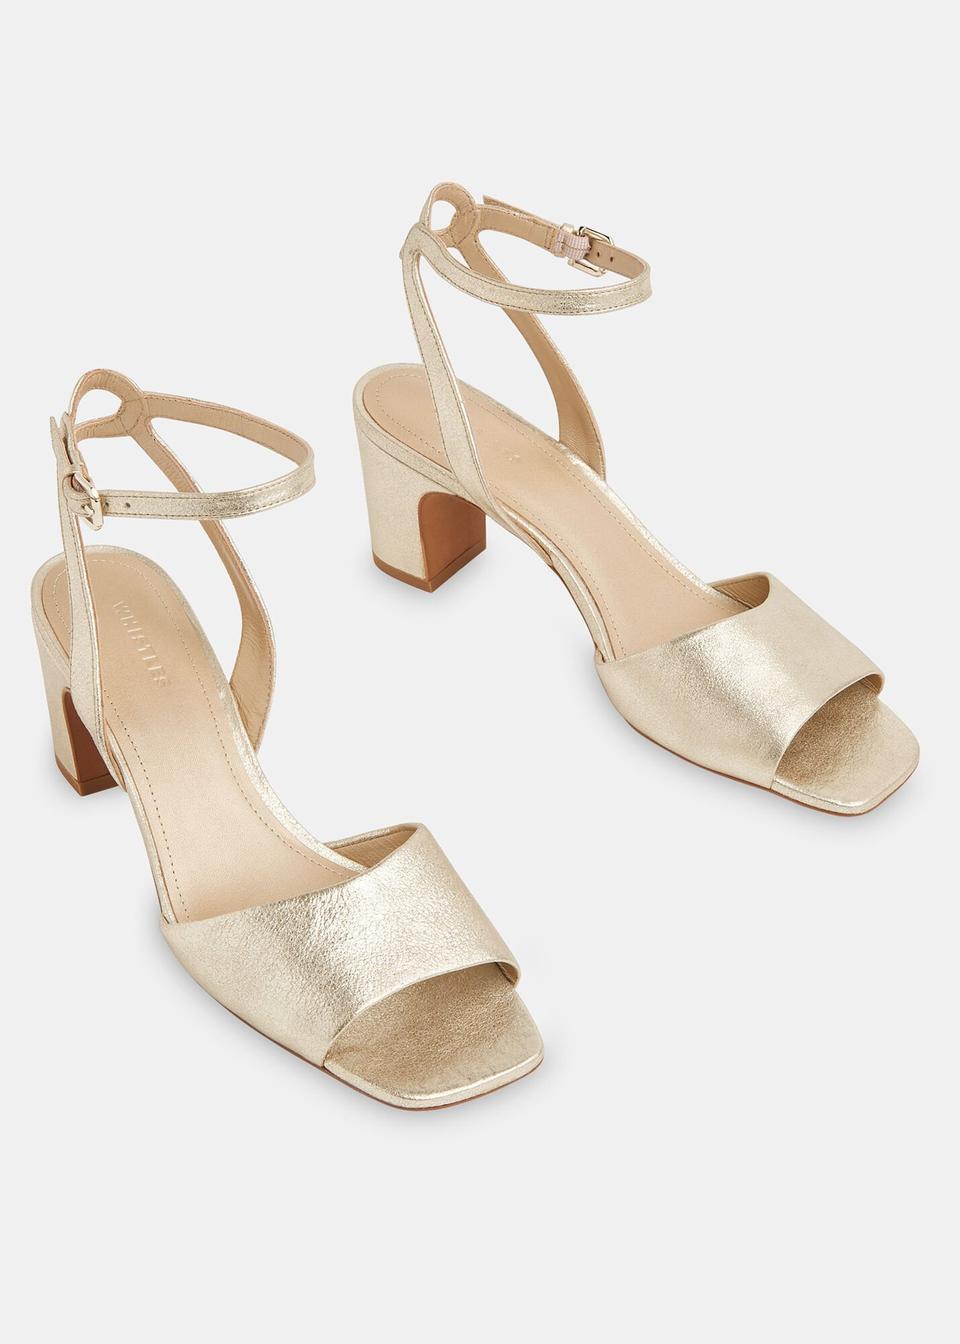 Block Heel Wedding Shoes: 35 Stylish Wedding Shoes - hitched.co.uk ...